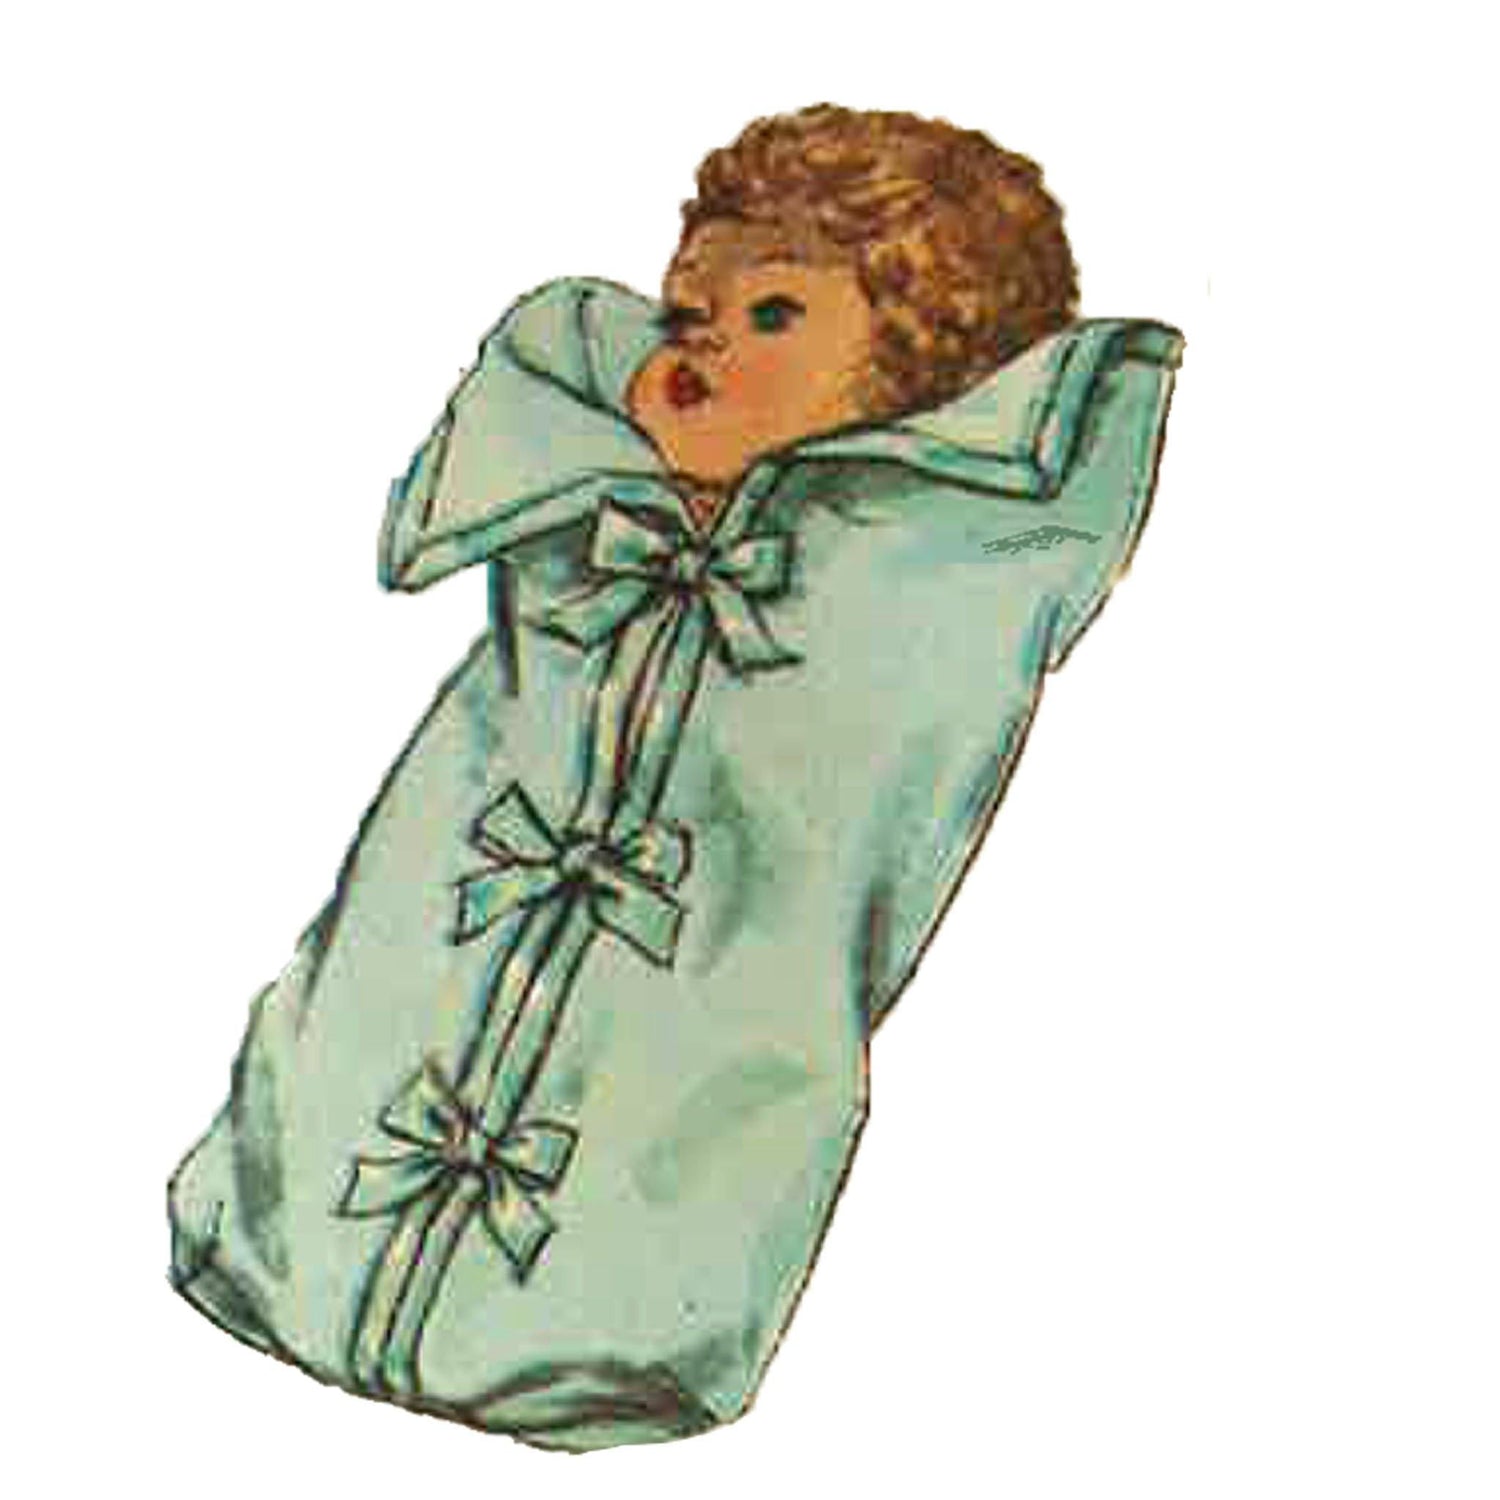 Doll in sleeping bag